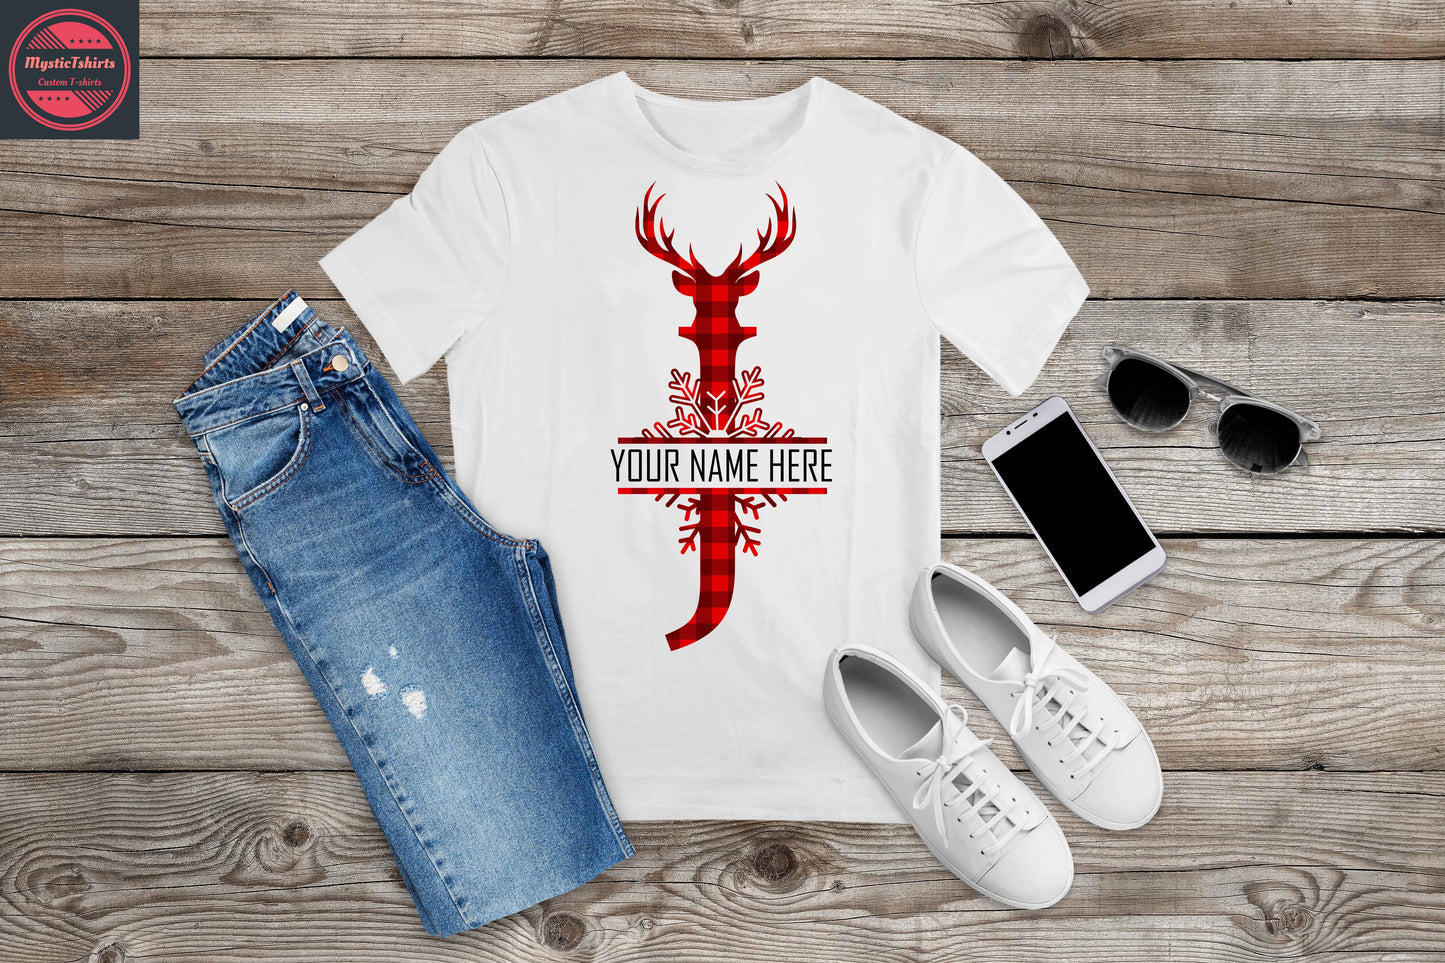 356. MONOGRAMMED RED REINDEER CHRISTMAS J, Custom Made Shirt, Personalized T-Shirt, Custom Text, Make Your Own Shirt, Custom Tee